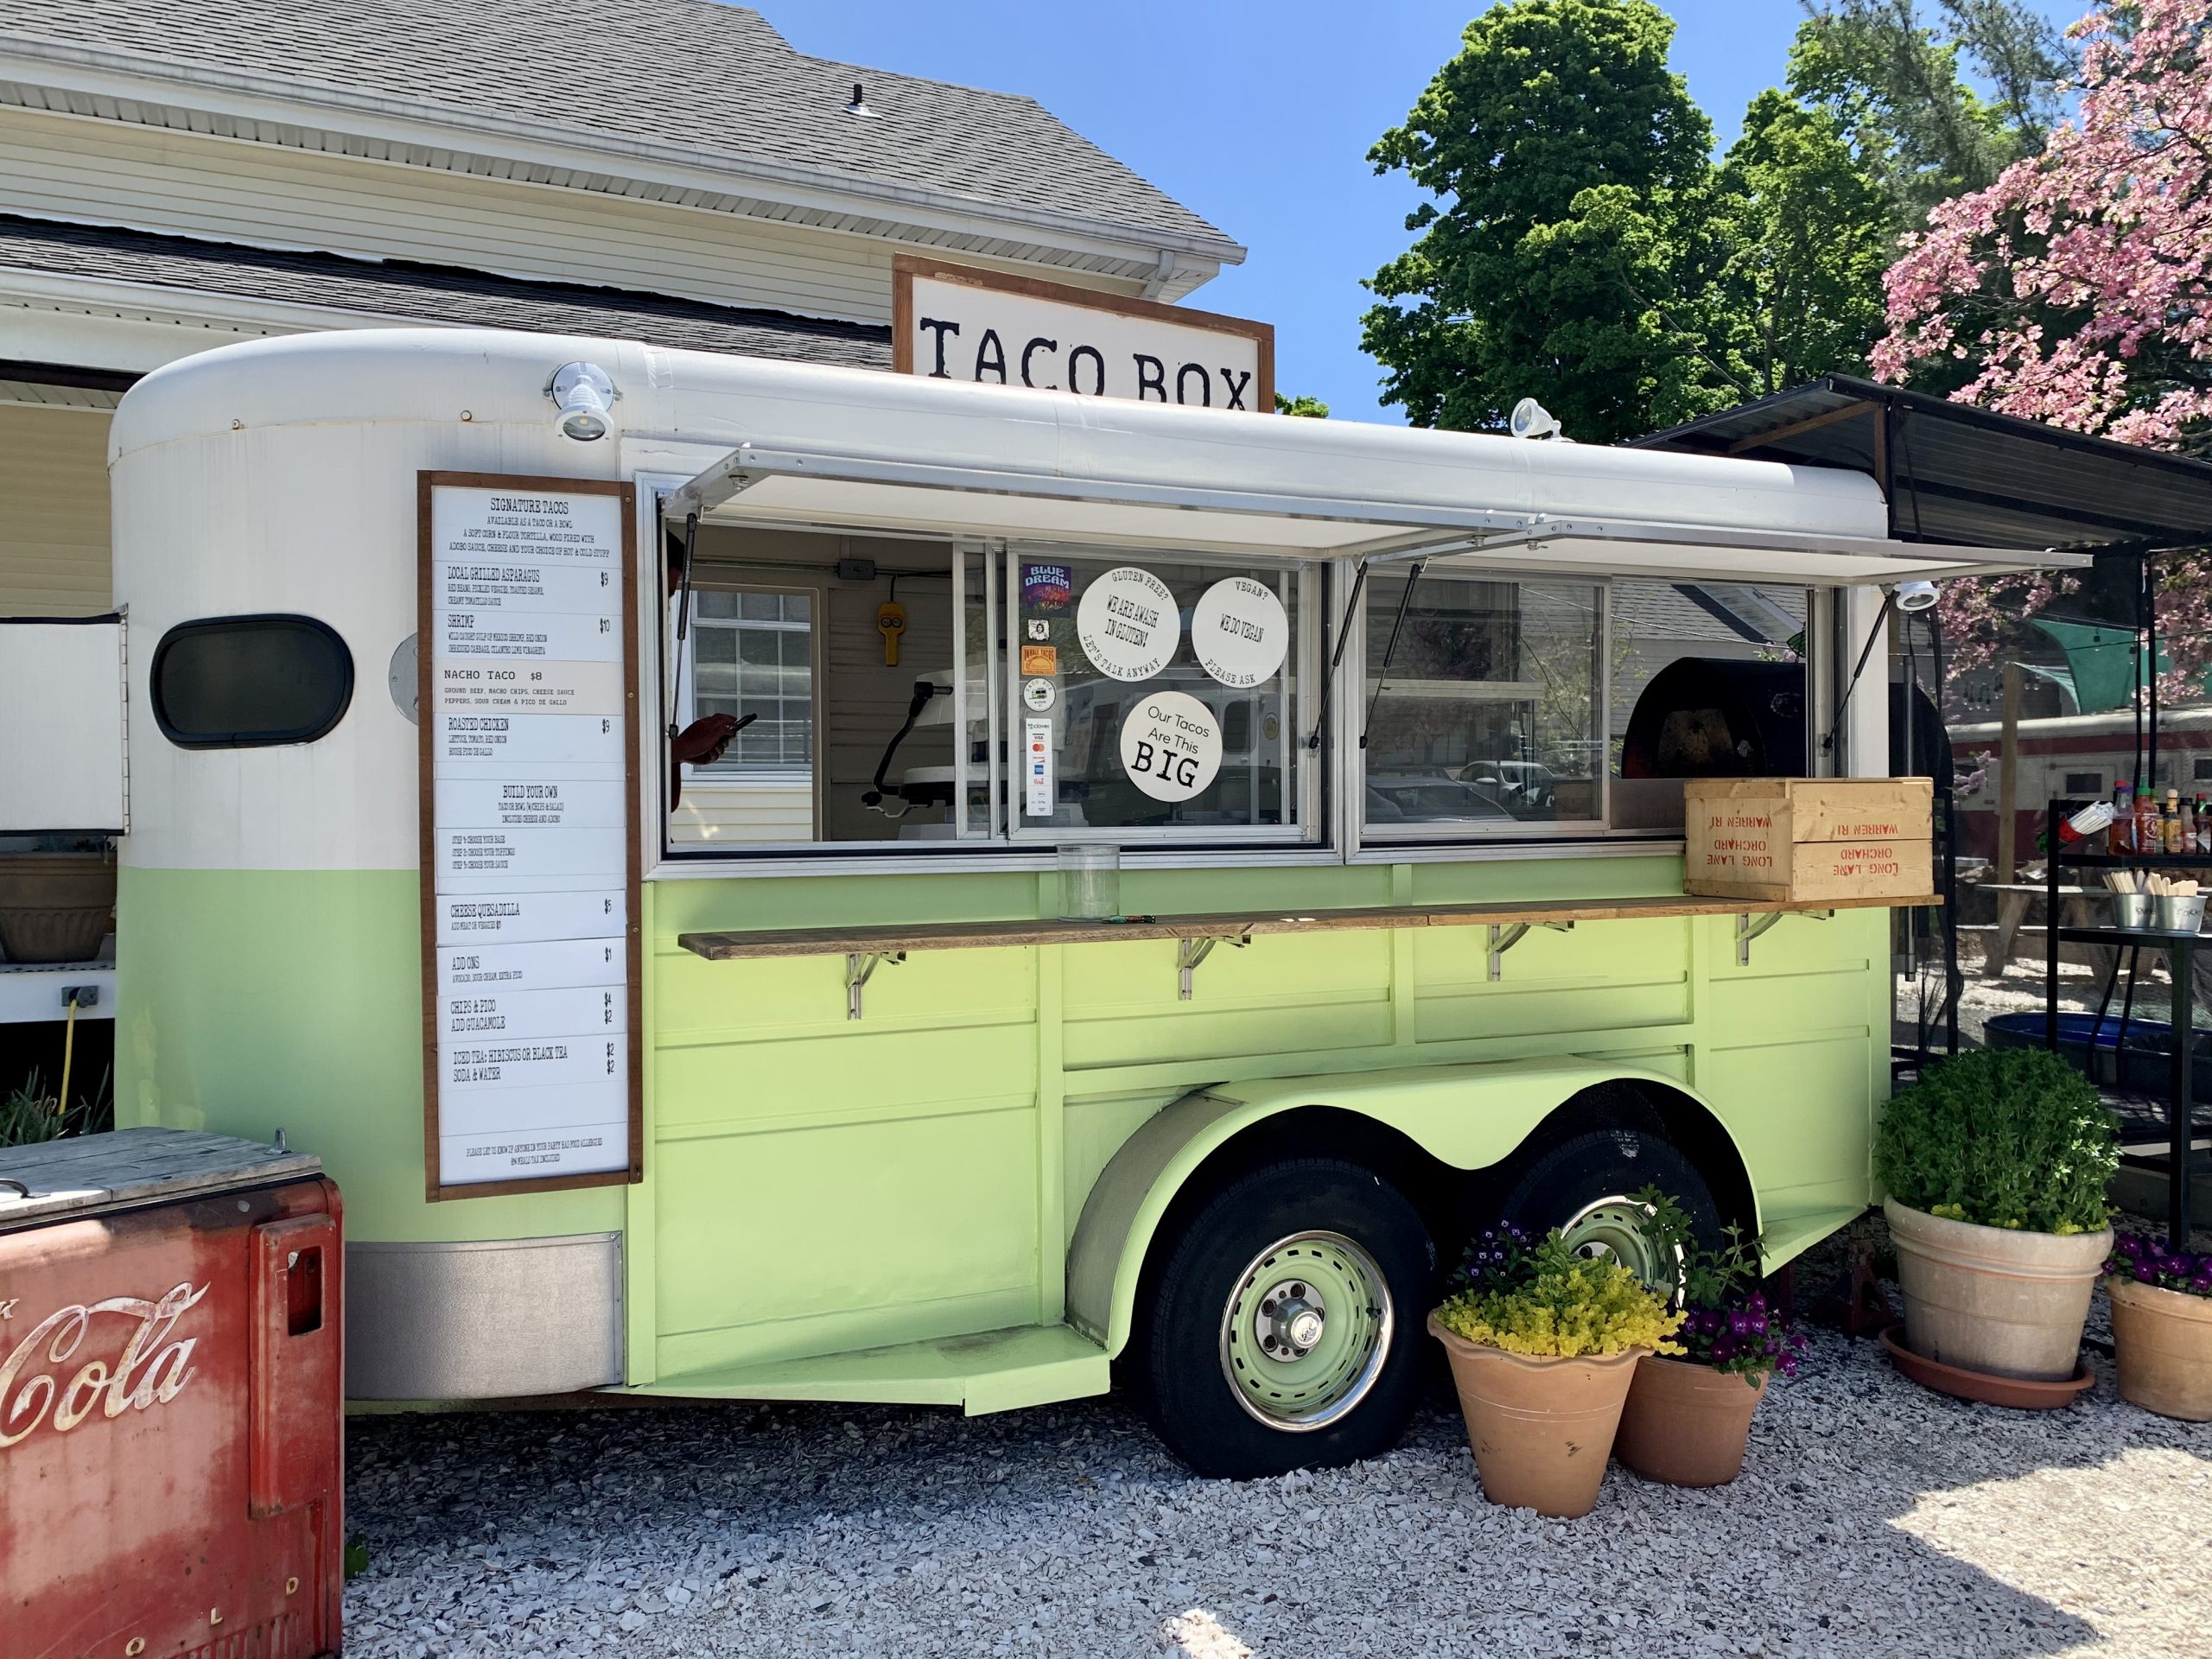 The Taco Box Trailer in Warren, RI